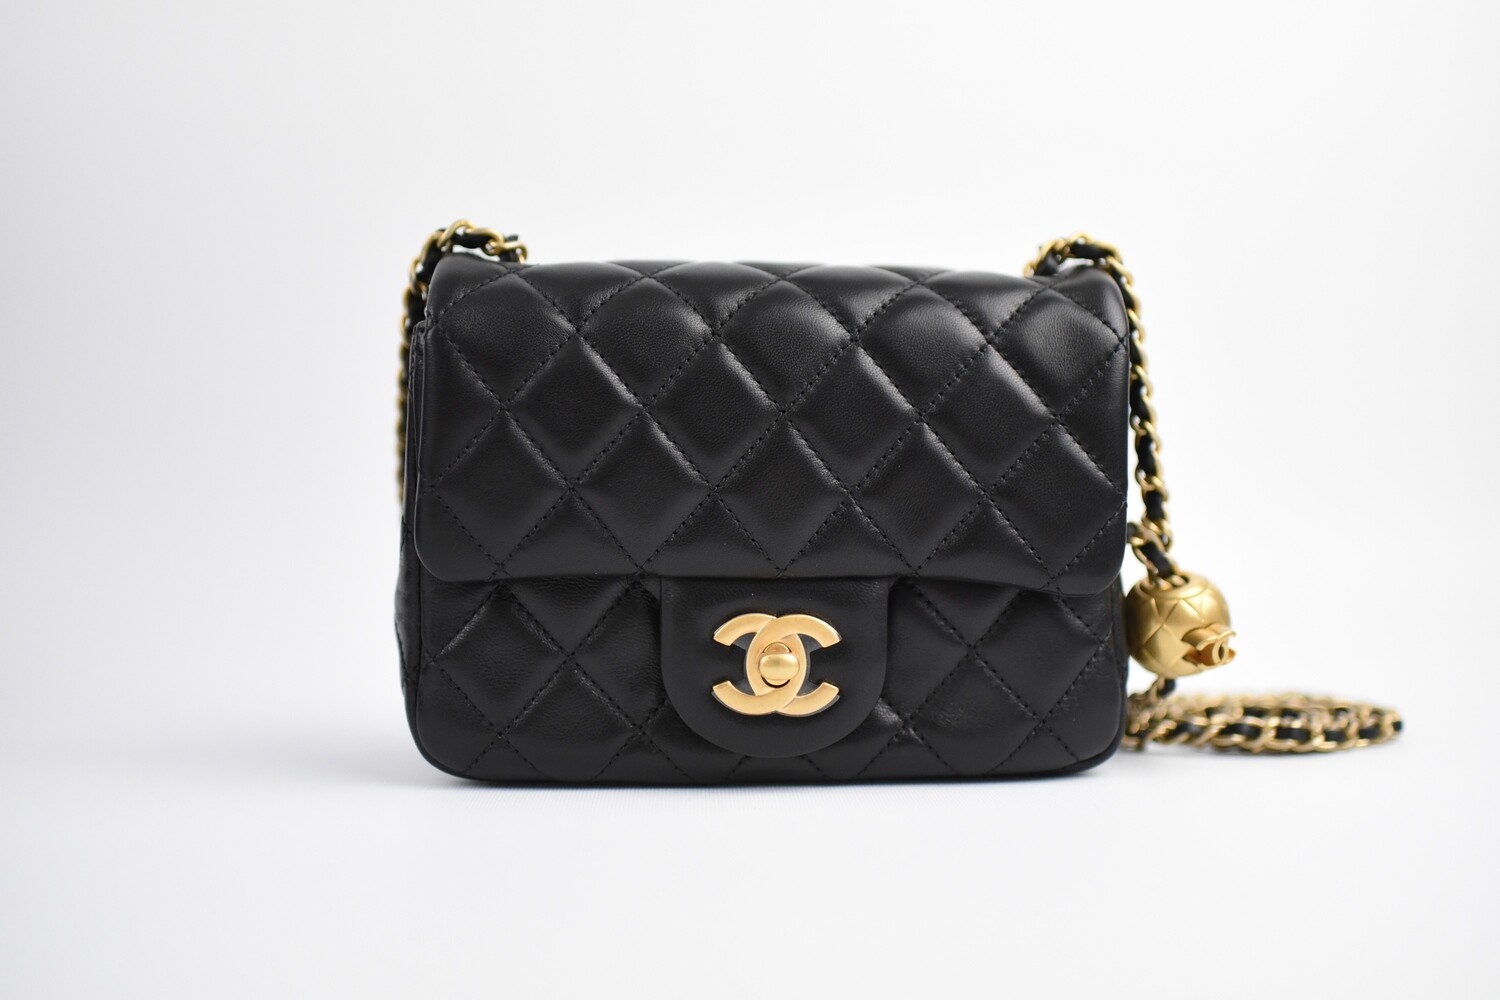 Chanel Mini Adjustable Gold Ball Chain Black Leather